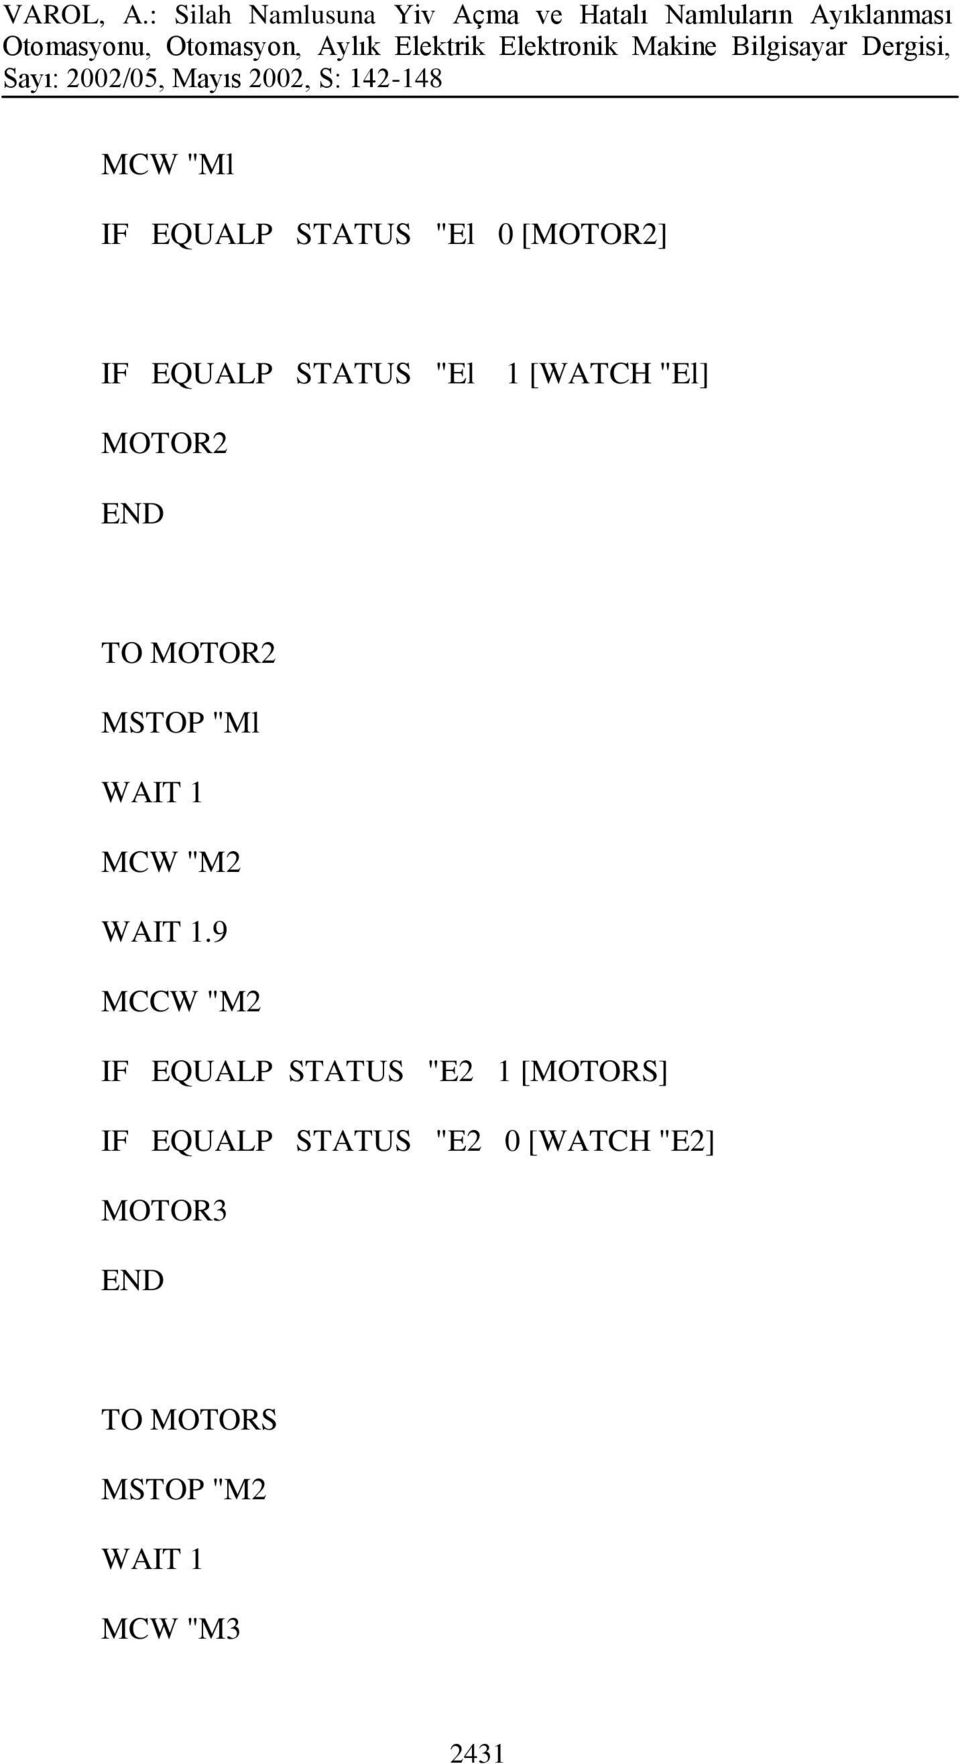 9 MCCW "M2 IF EQUALP STATUS "E2 1 [MOTORS] IF EQUALP